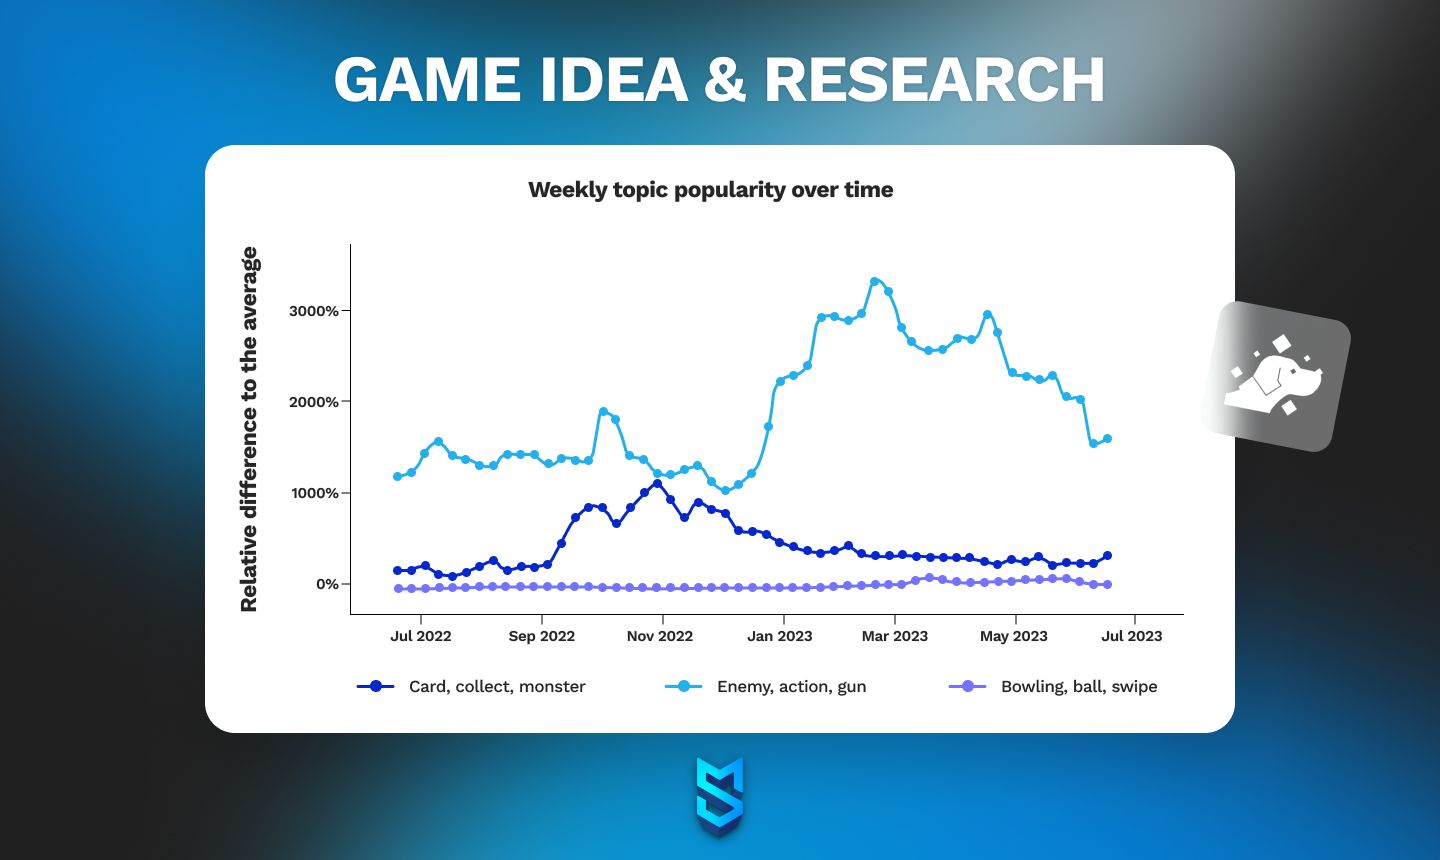 Game idea & research